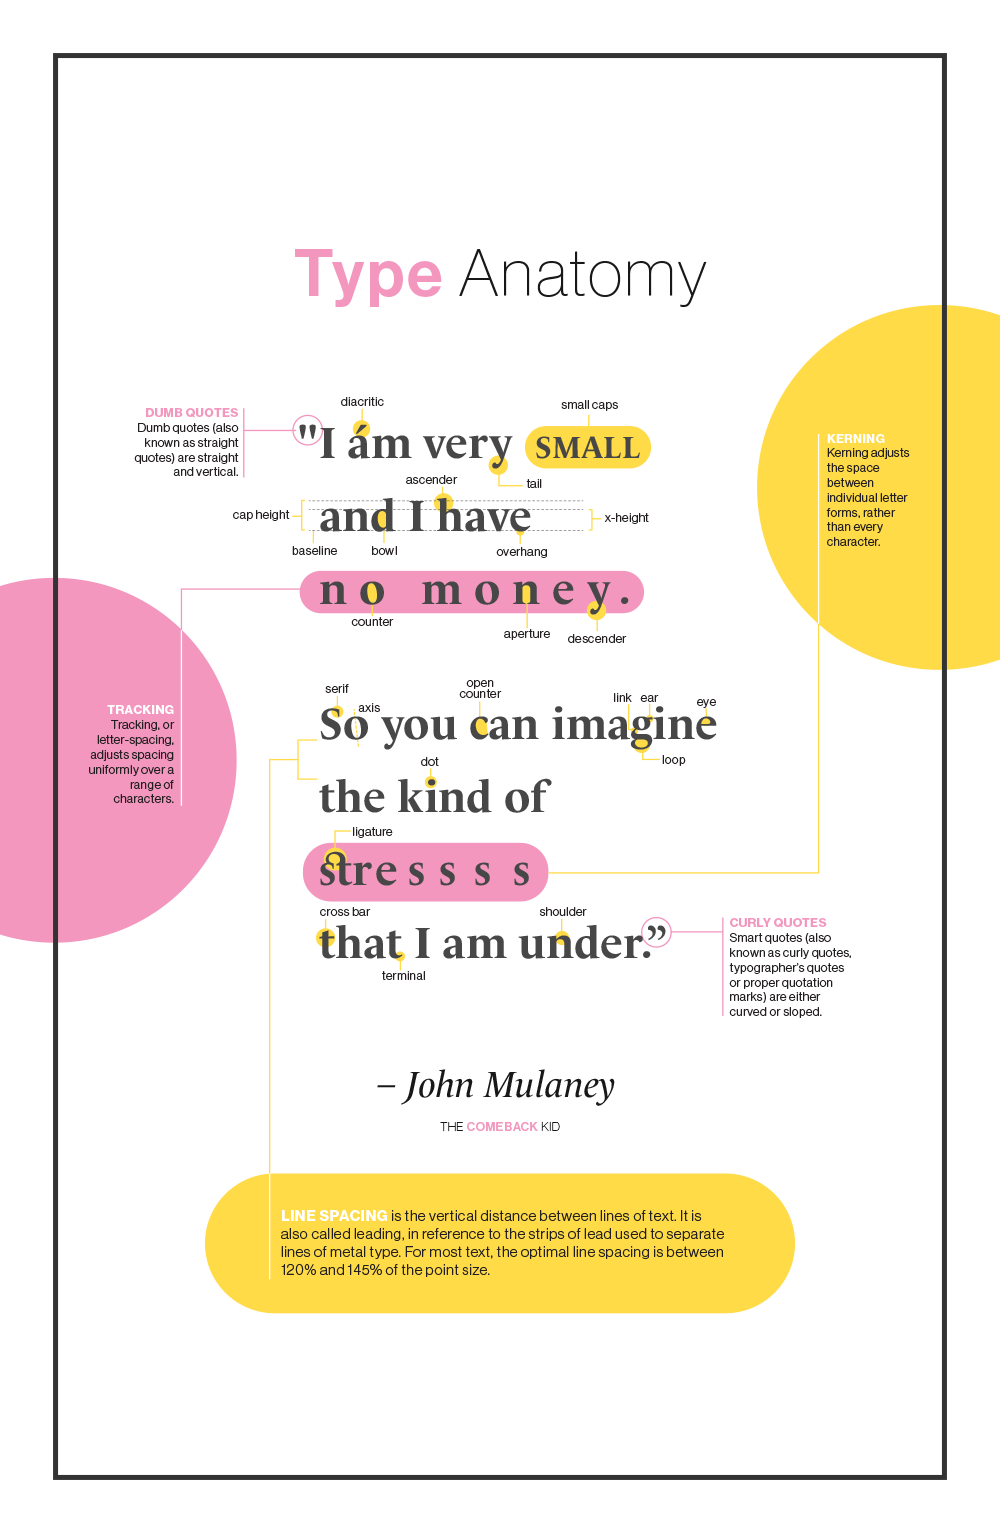 Type Anatomy Poster by Katie Hostetler